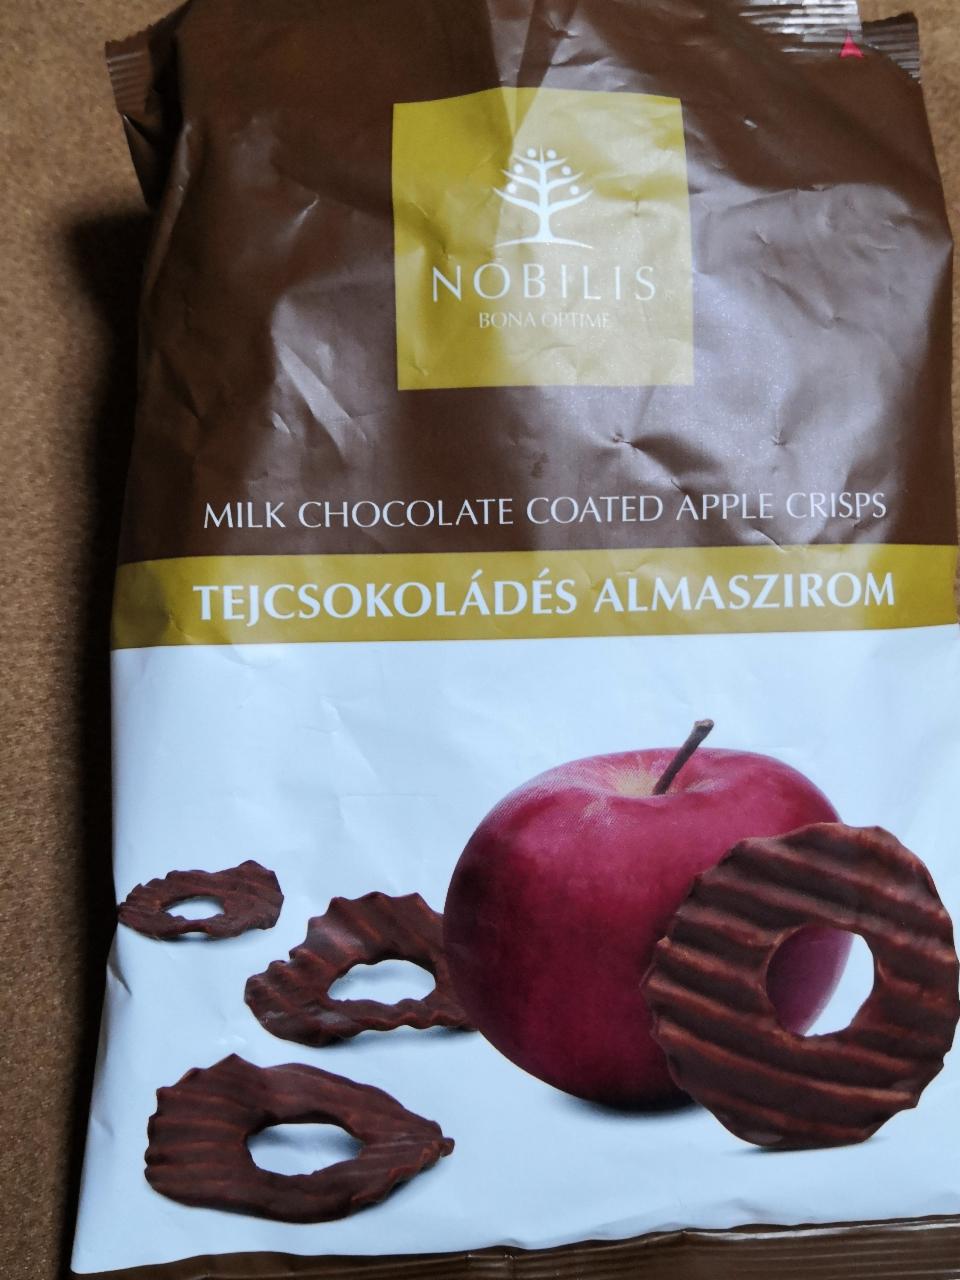 Fotografie - Milk chocolate coated apple crisps Nobilis